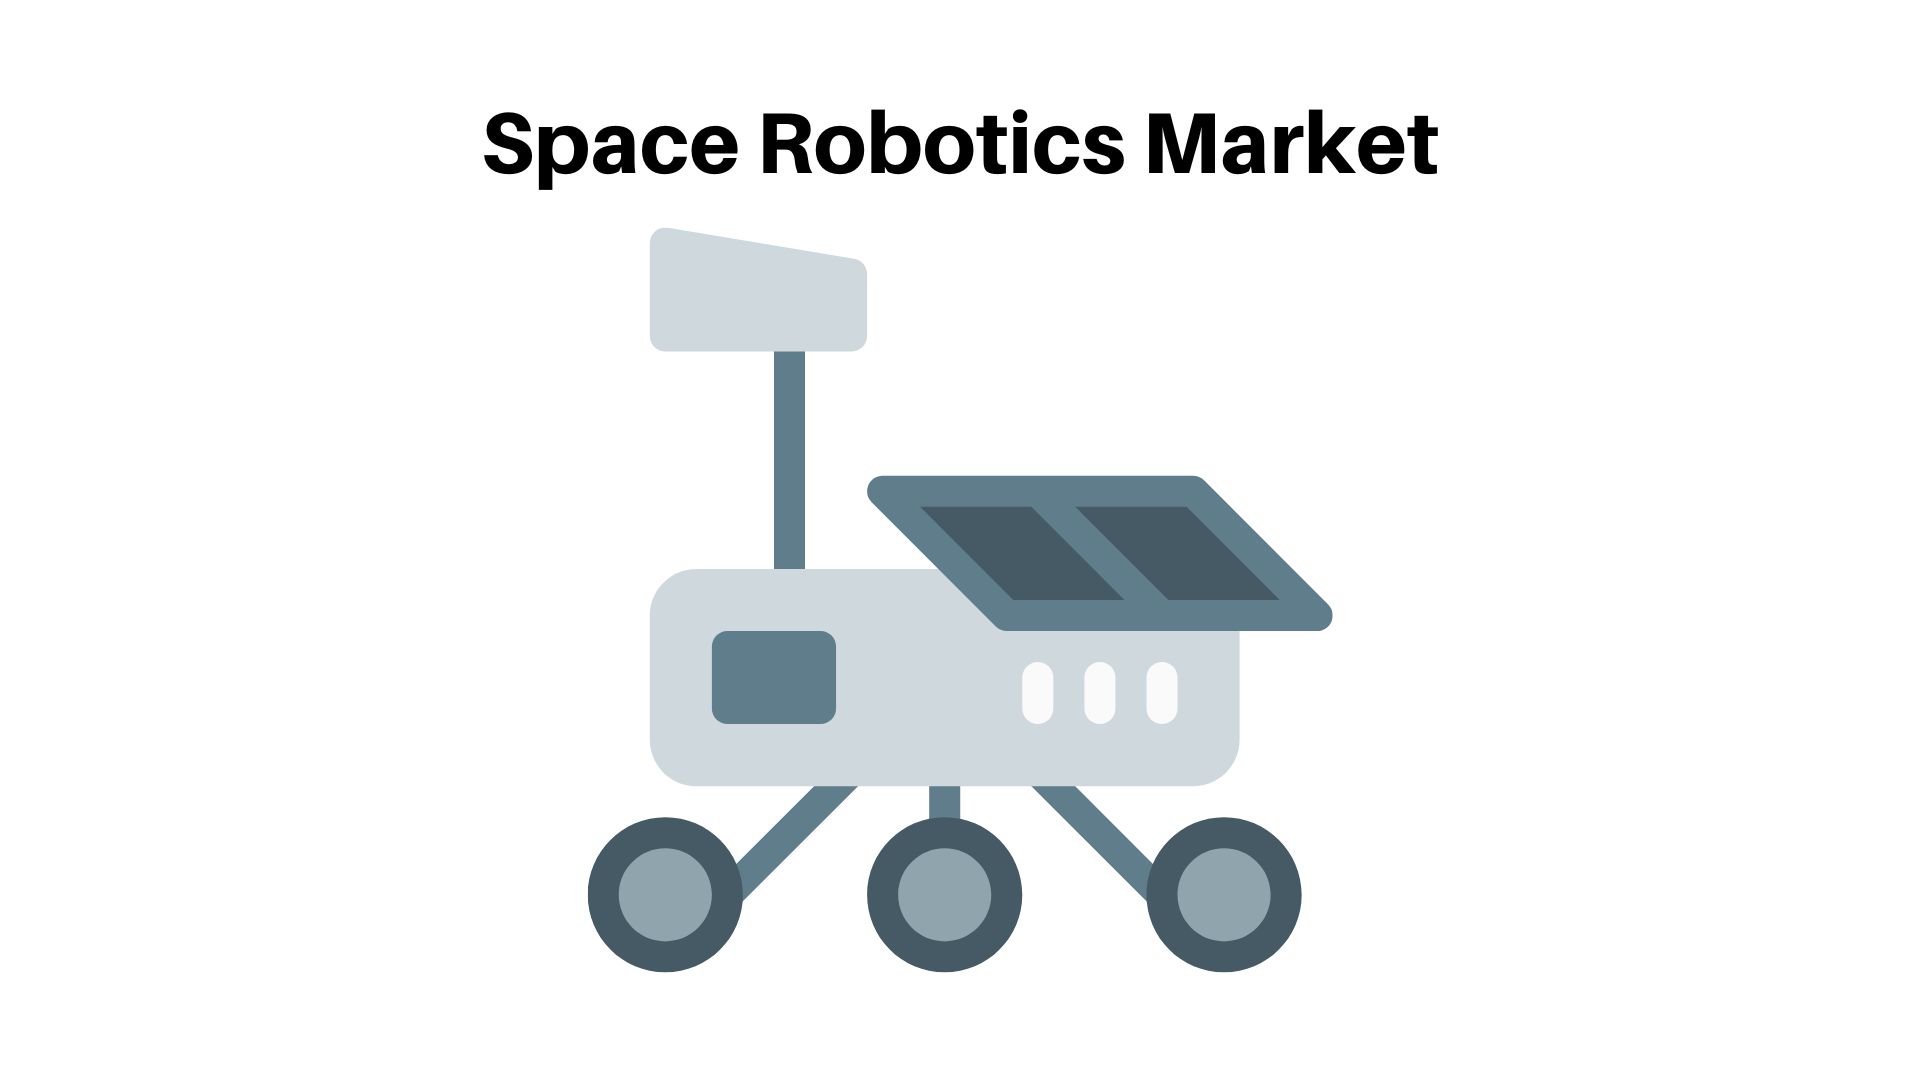 Space Robotics Market to Reach USD 8.8 billion by 2032